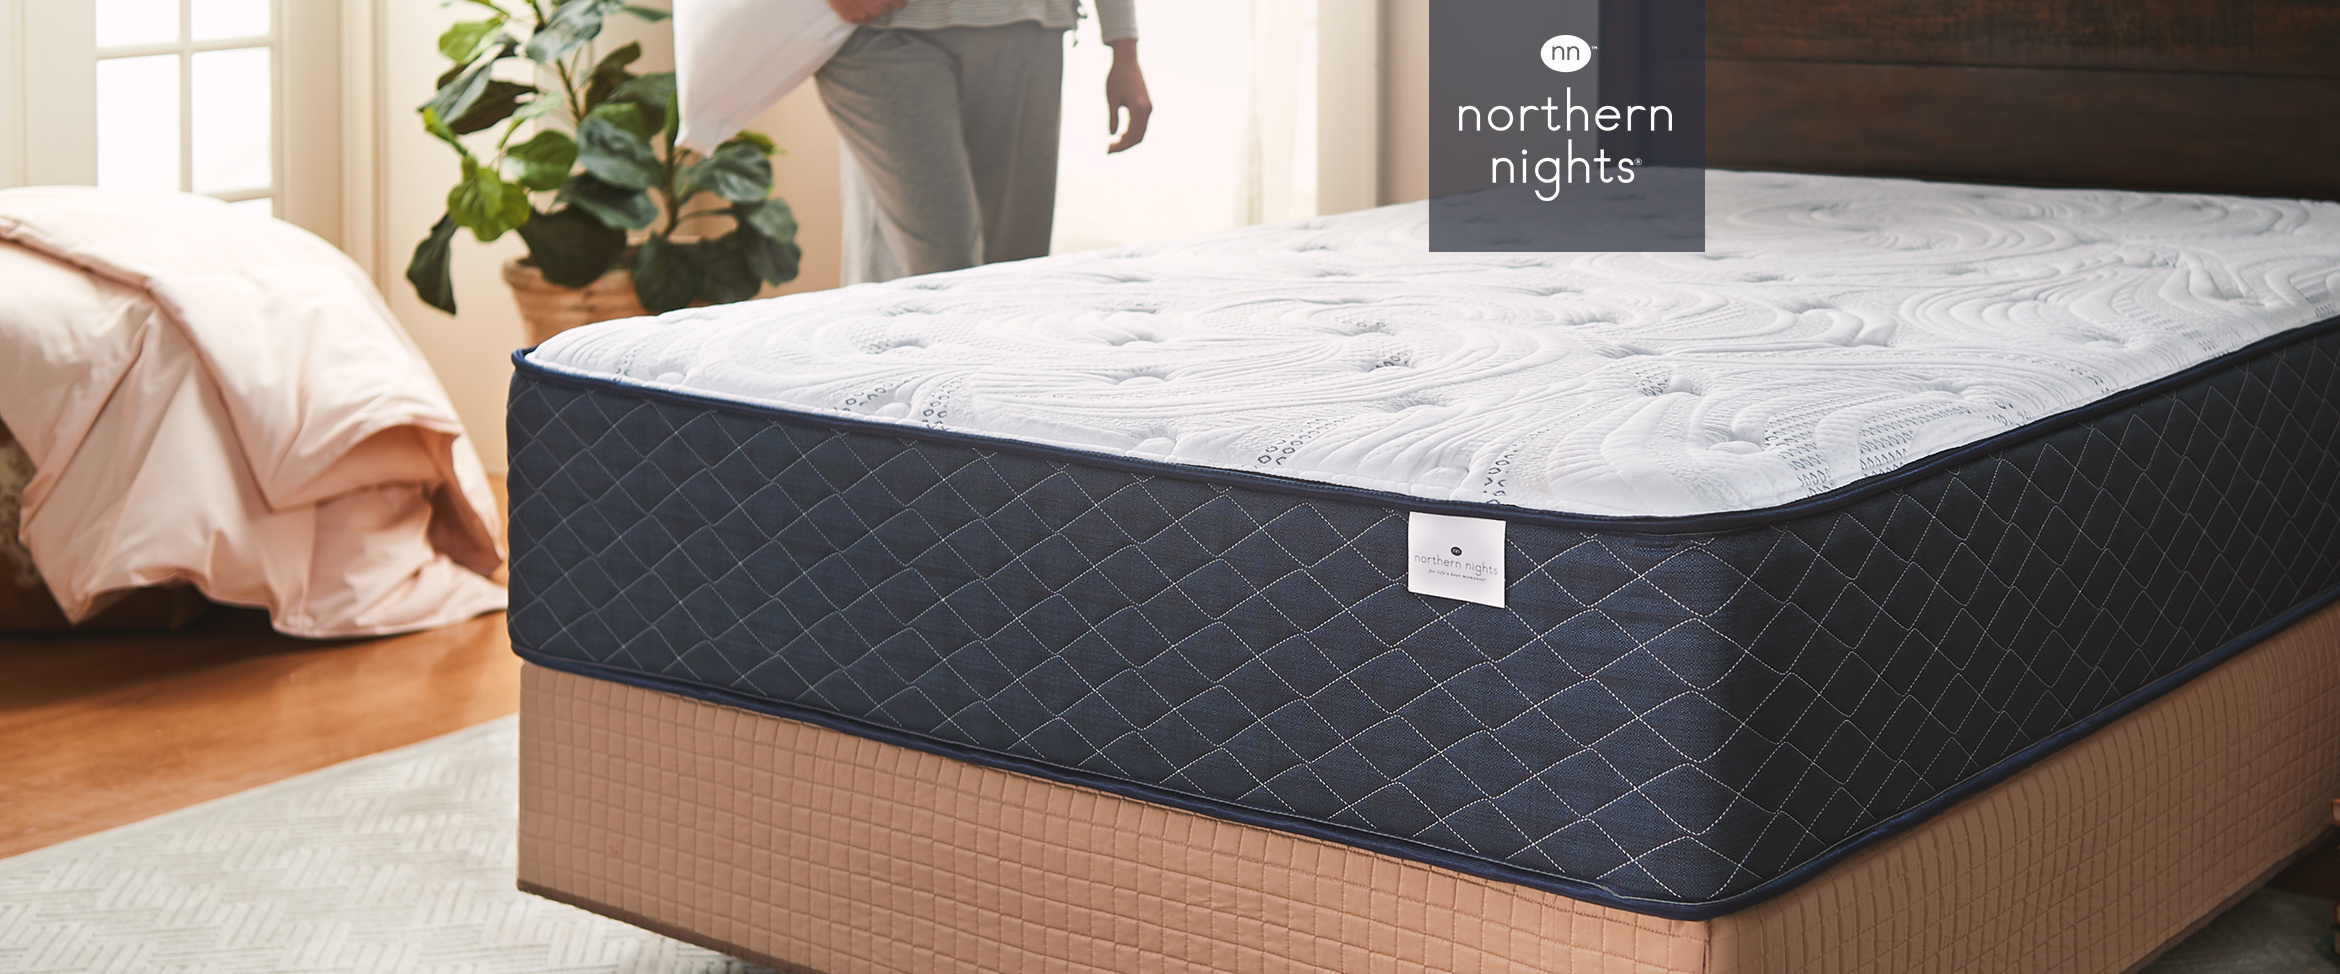 northern nights dual coil hybrid mattress